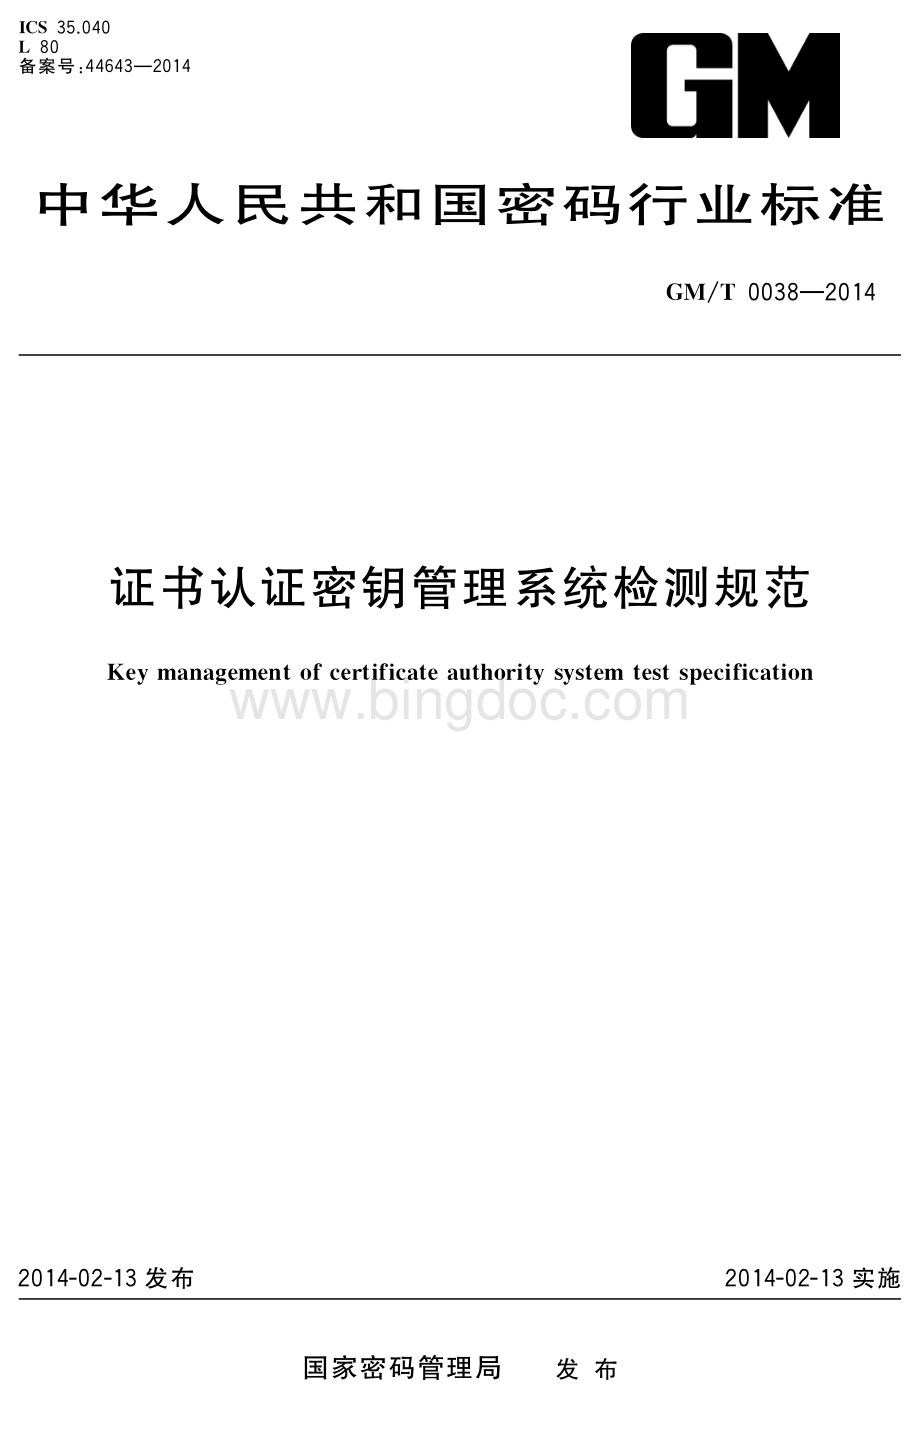 GM-T 0038-2014 证书认证密钥管理系统检测规范.pdf